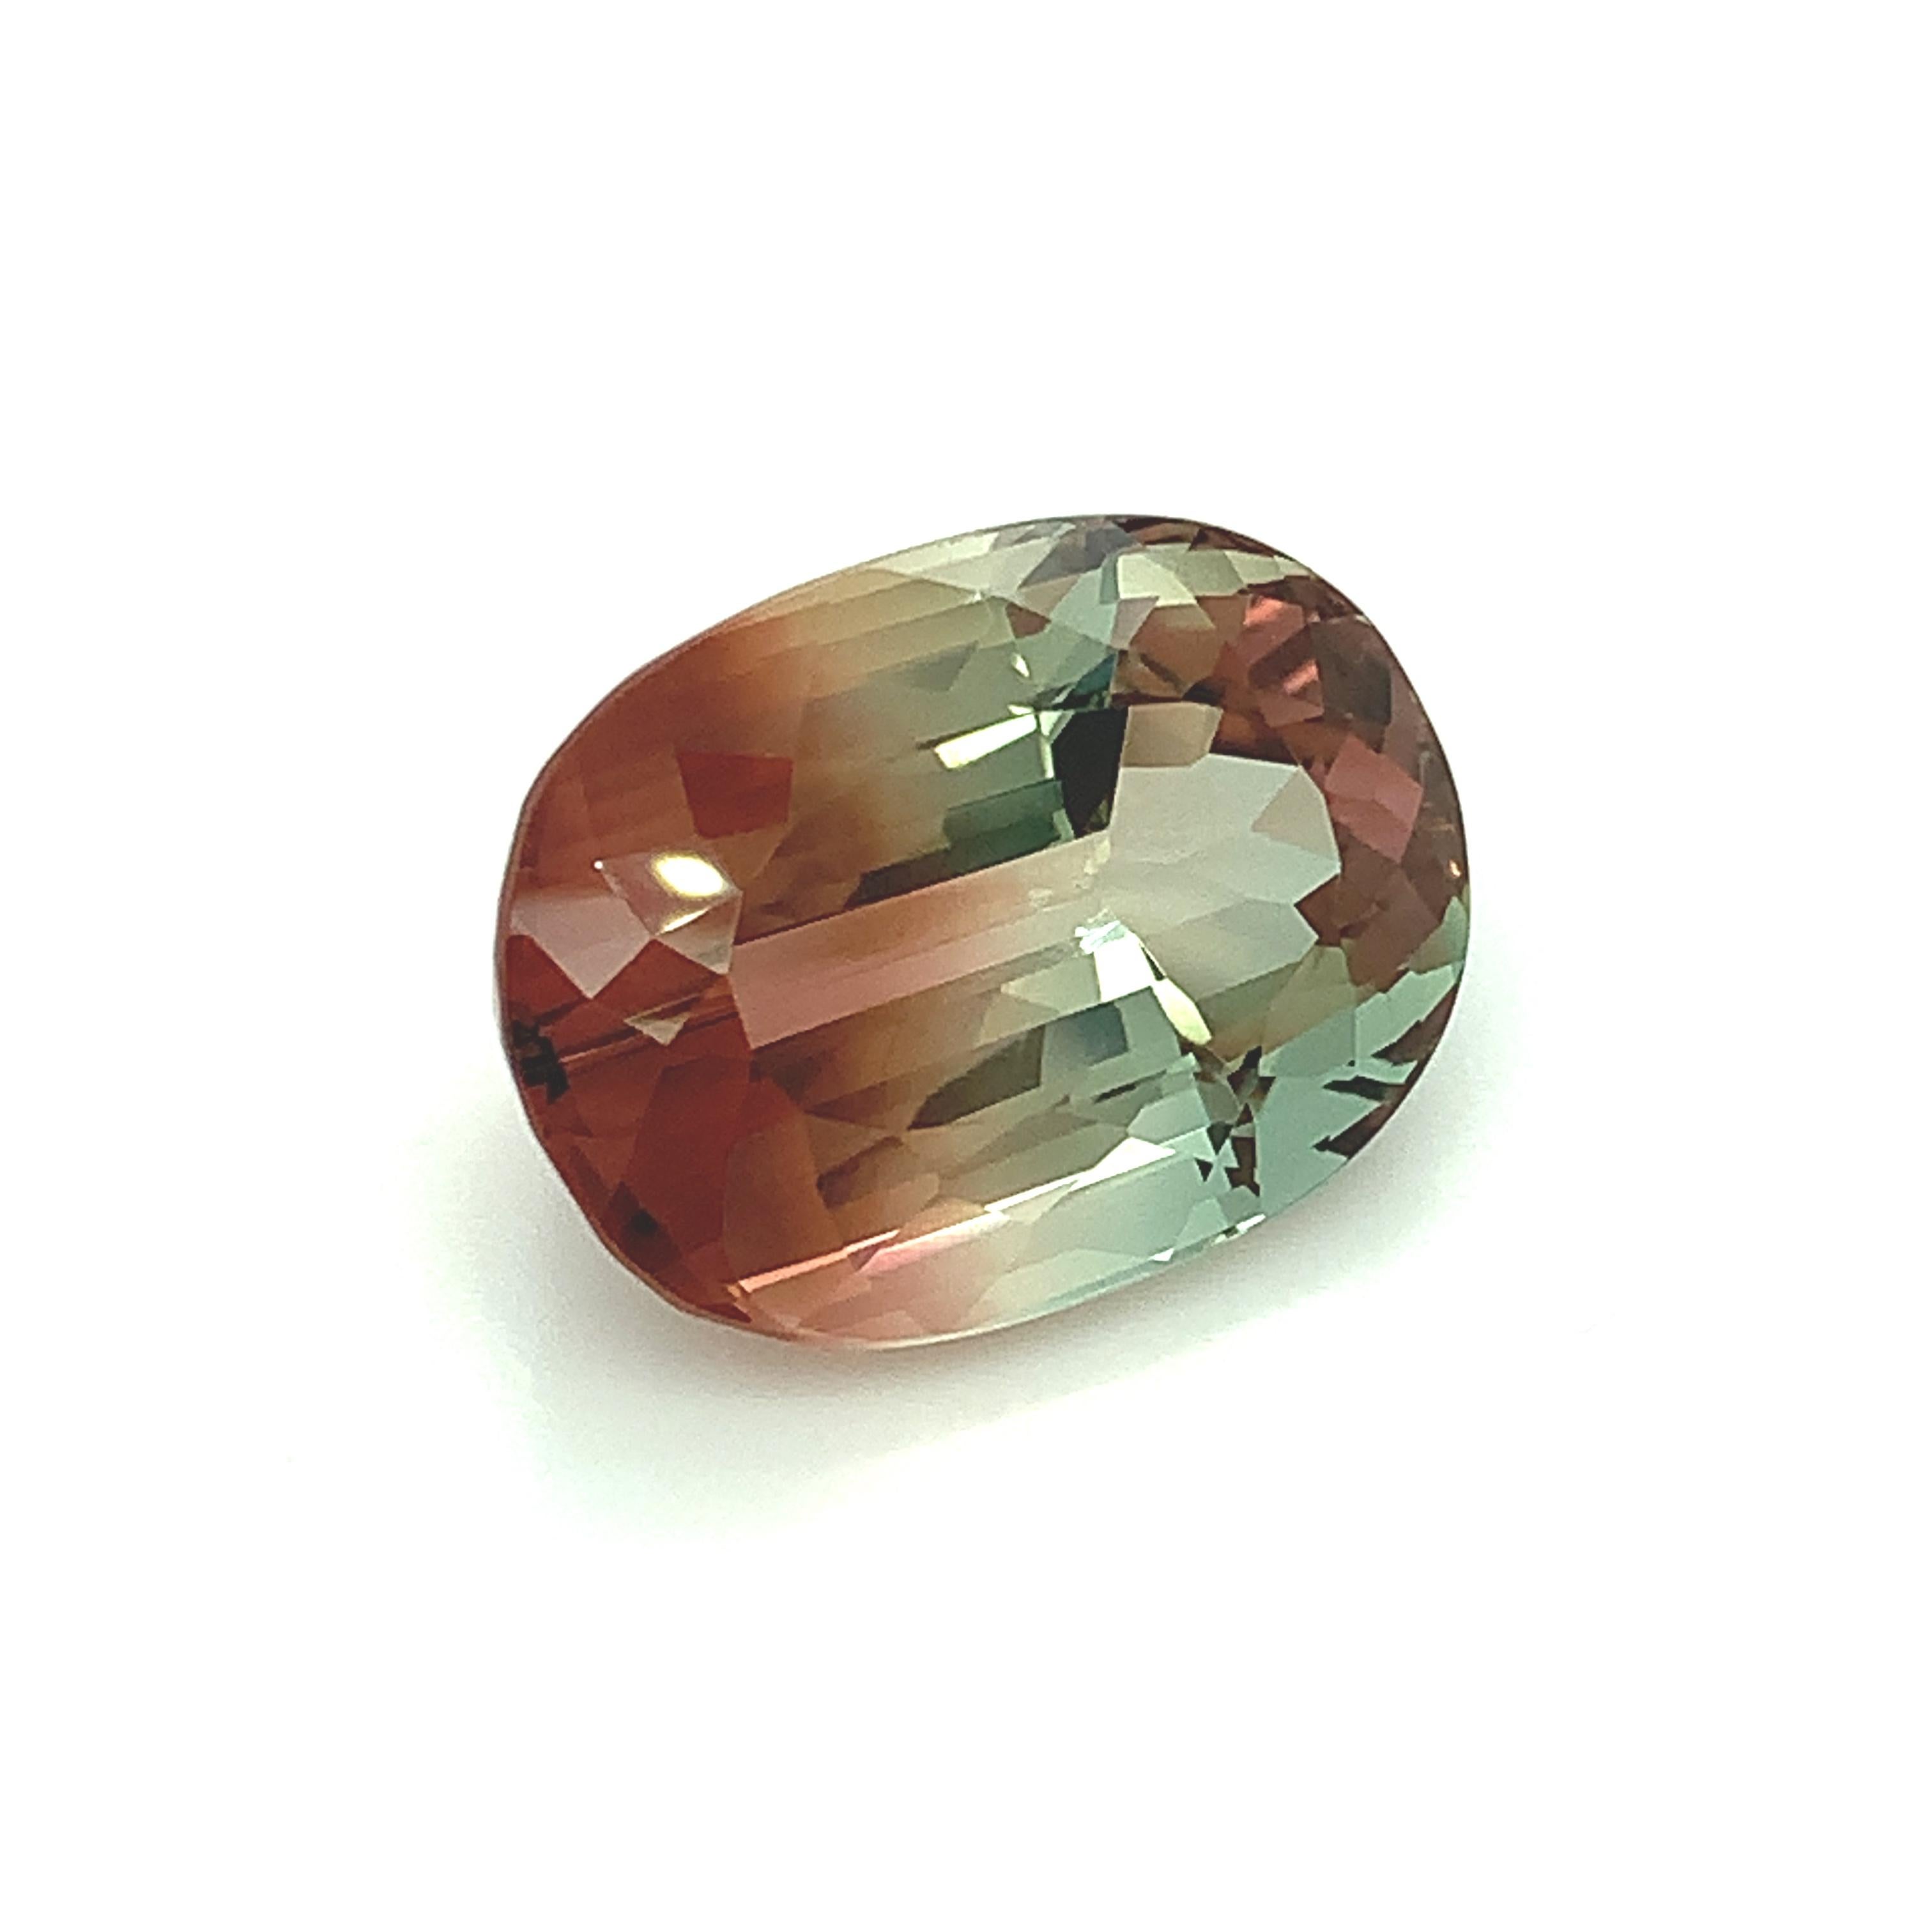 Artisan Tourmaline bicolore ovale non sertie 33,40 carats, pierre précieuse de collection pour pendentif ou bague en vente